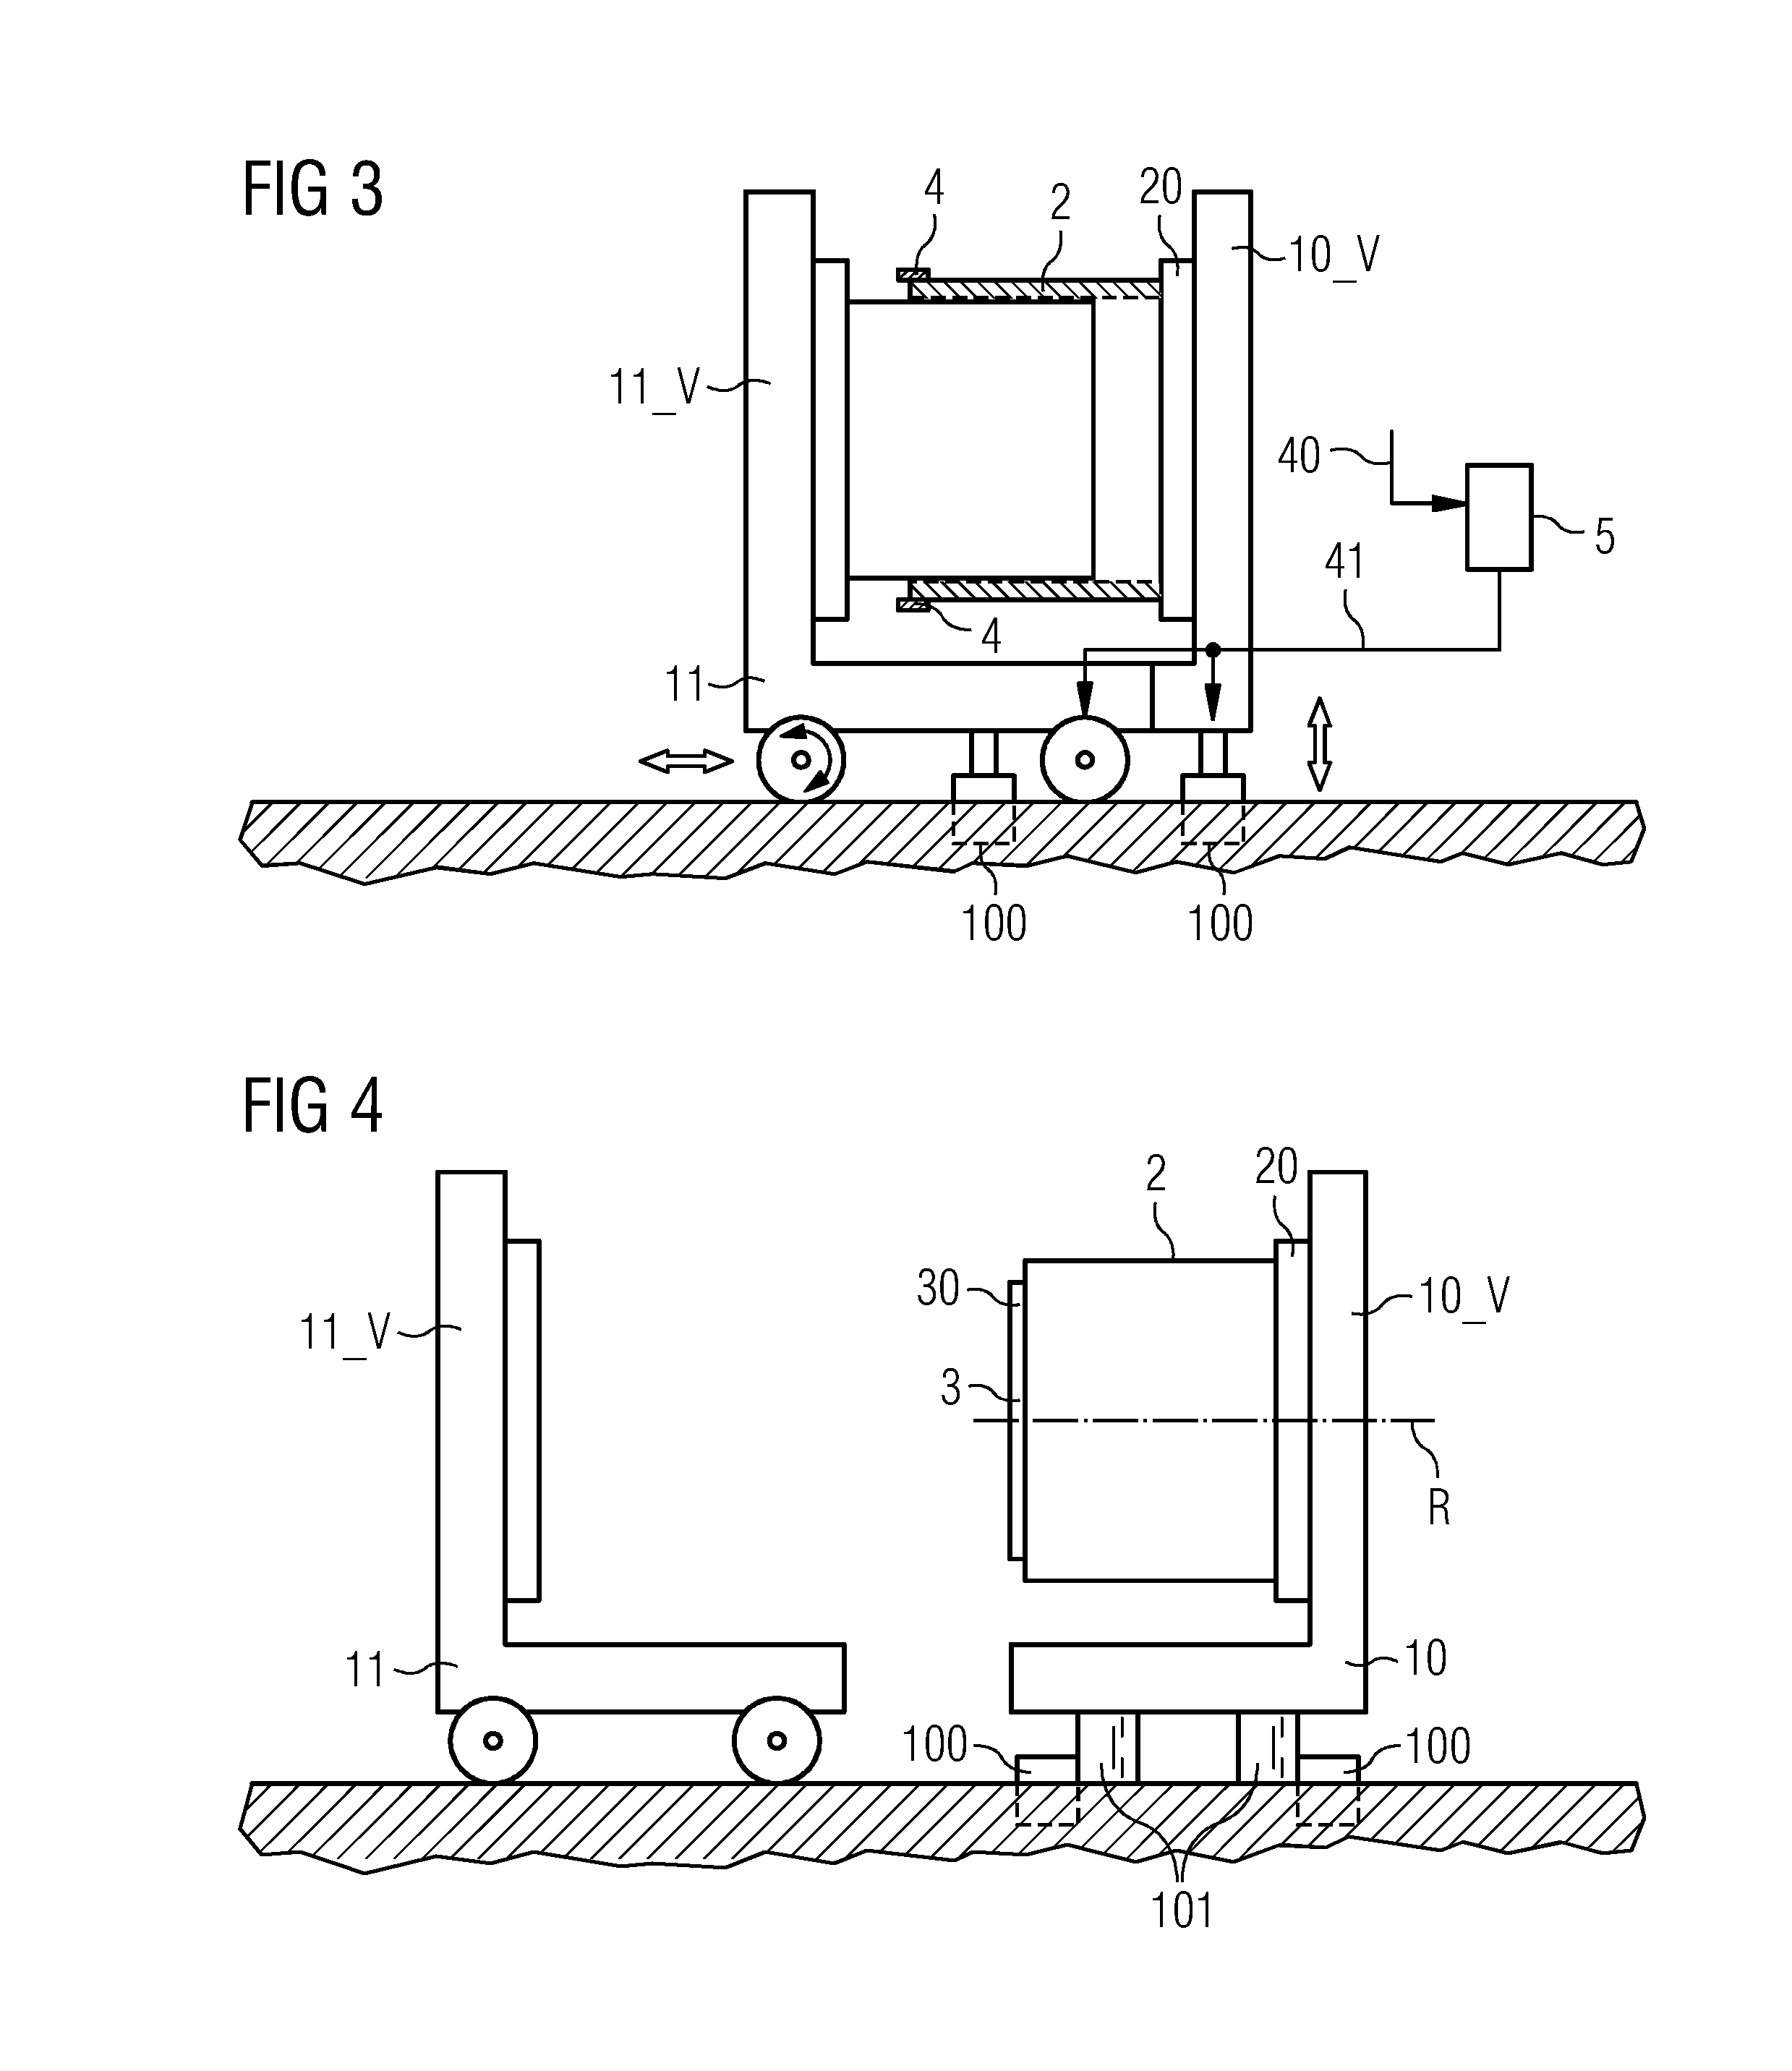 Generator assembly apparatus